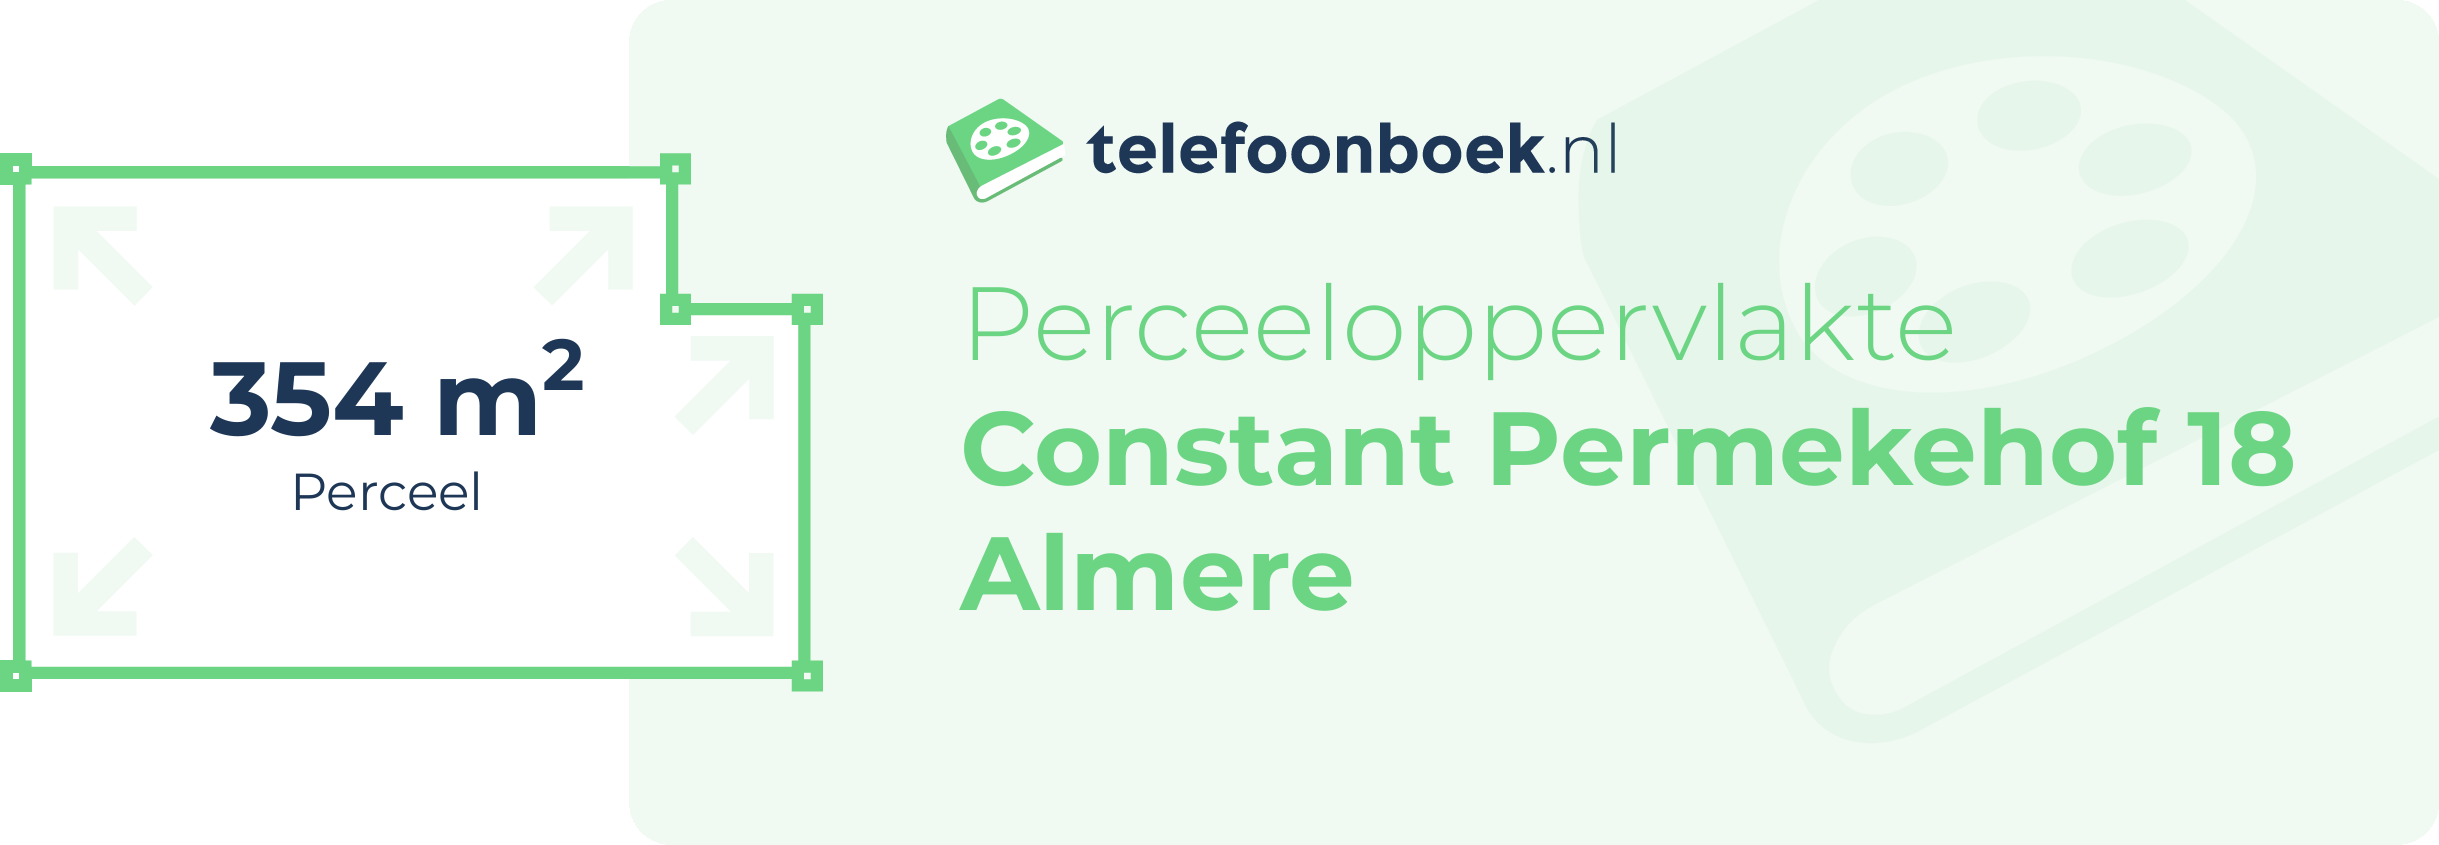 Perceeloppervlakte Constant Permekehof 18 Almere